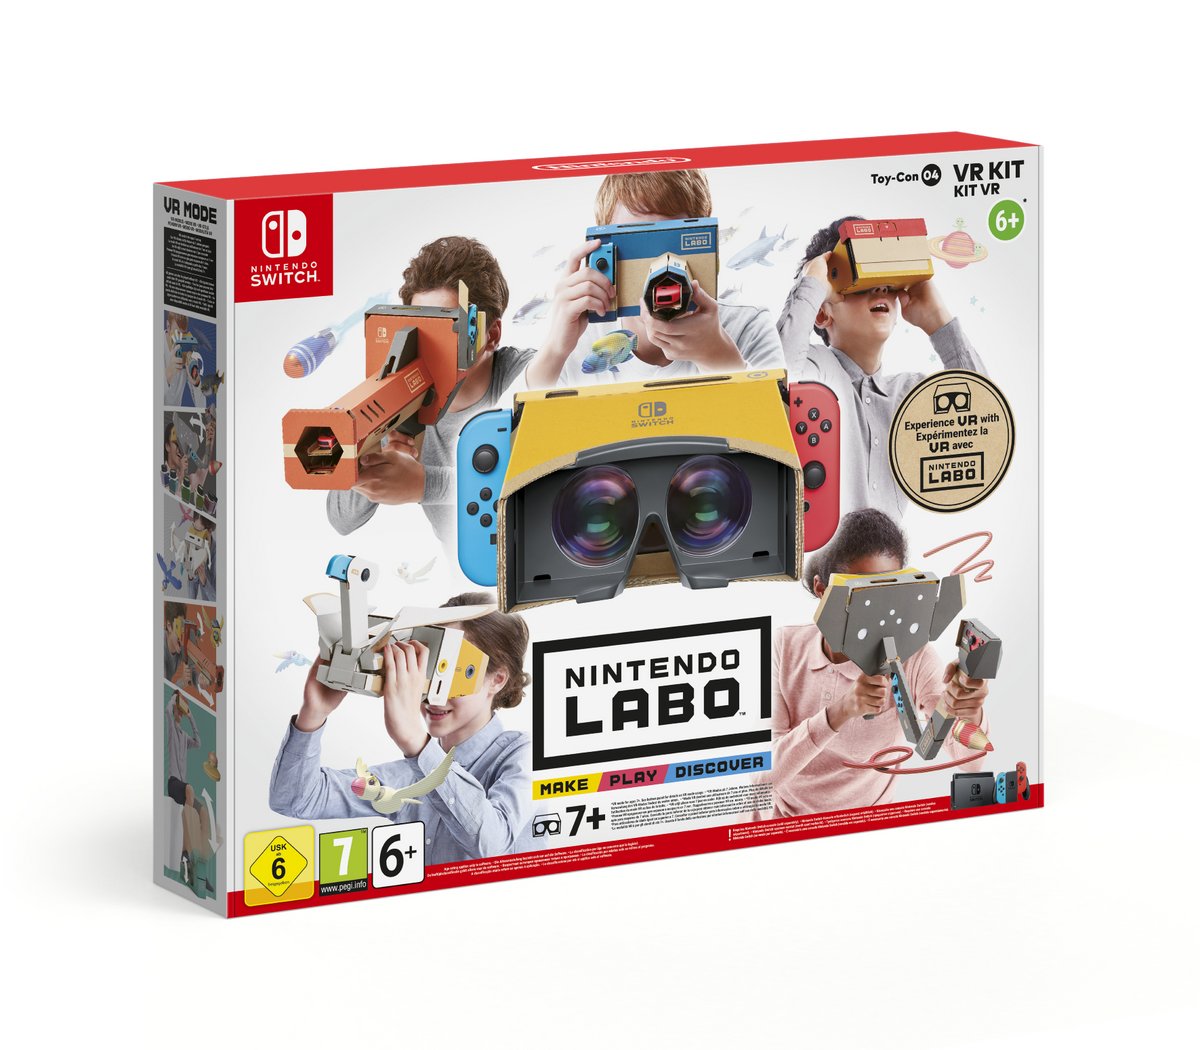 Nintendo Labo VR